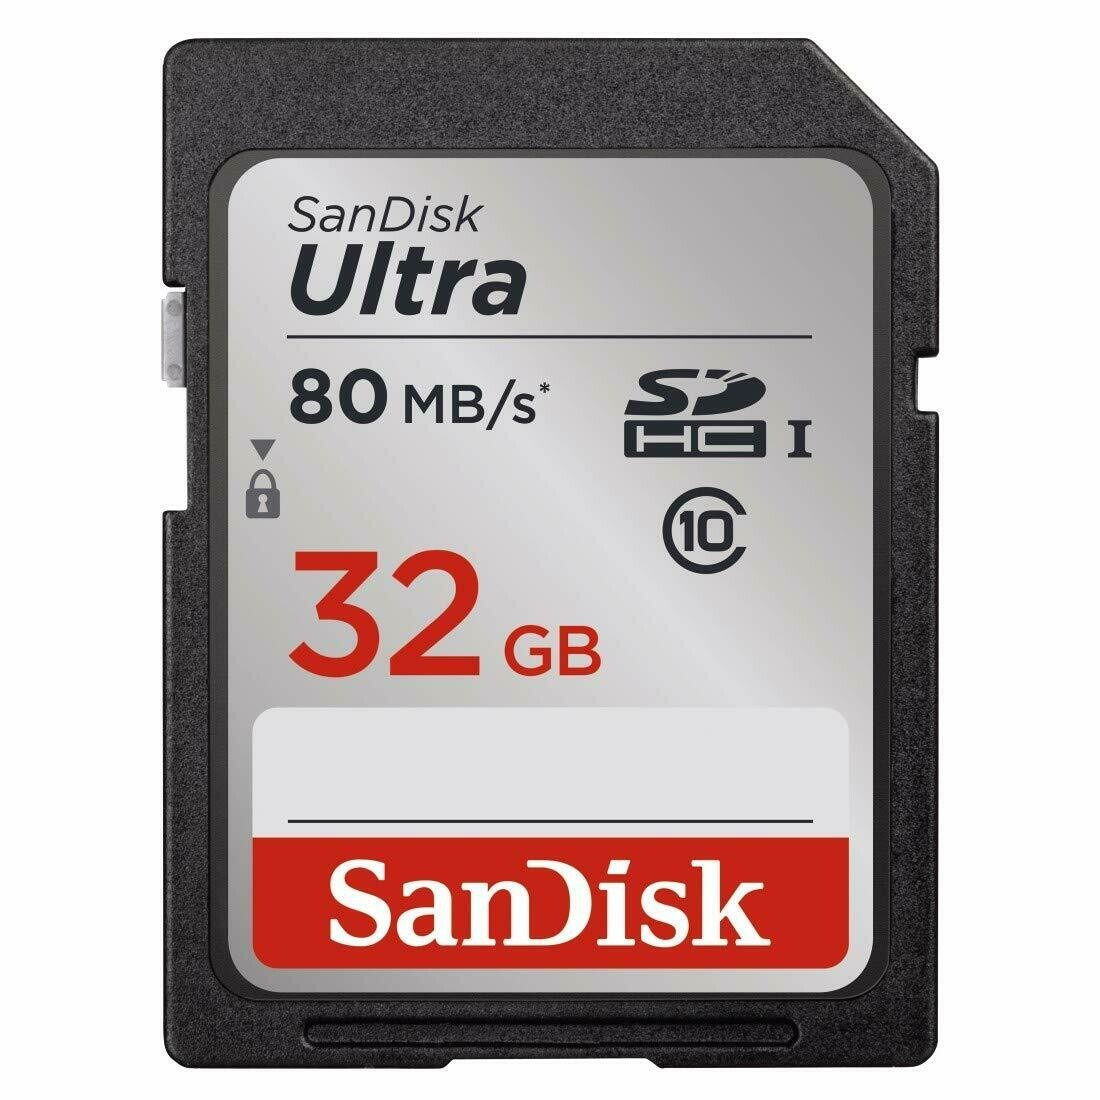 SanDisk 32GB Ultra SDHC Memory Card 80MB